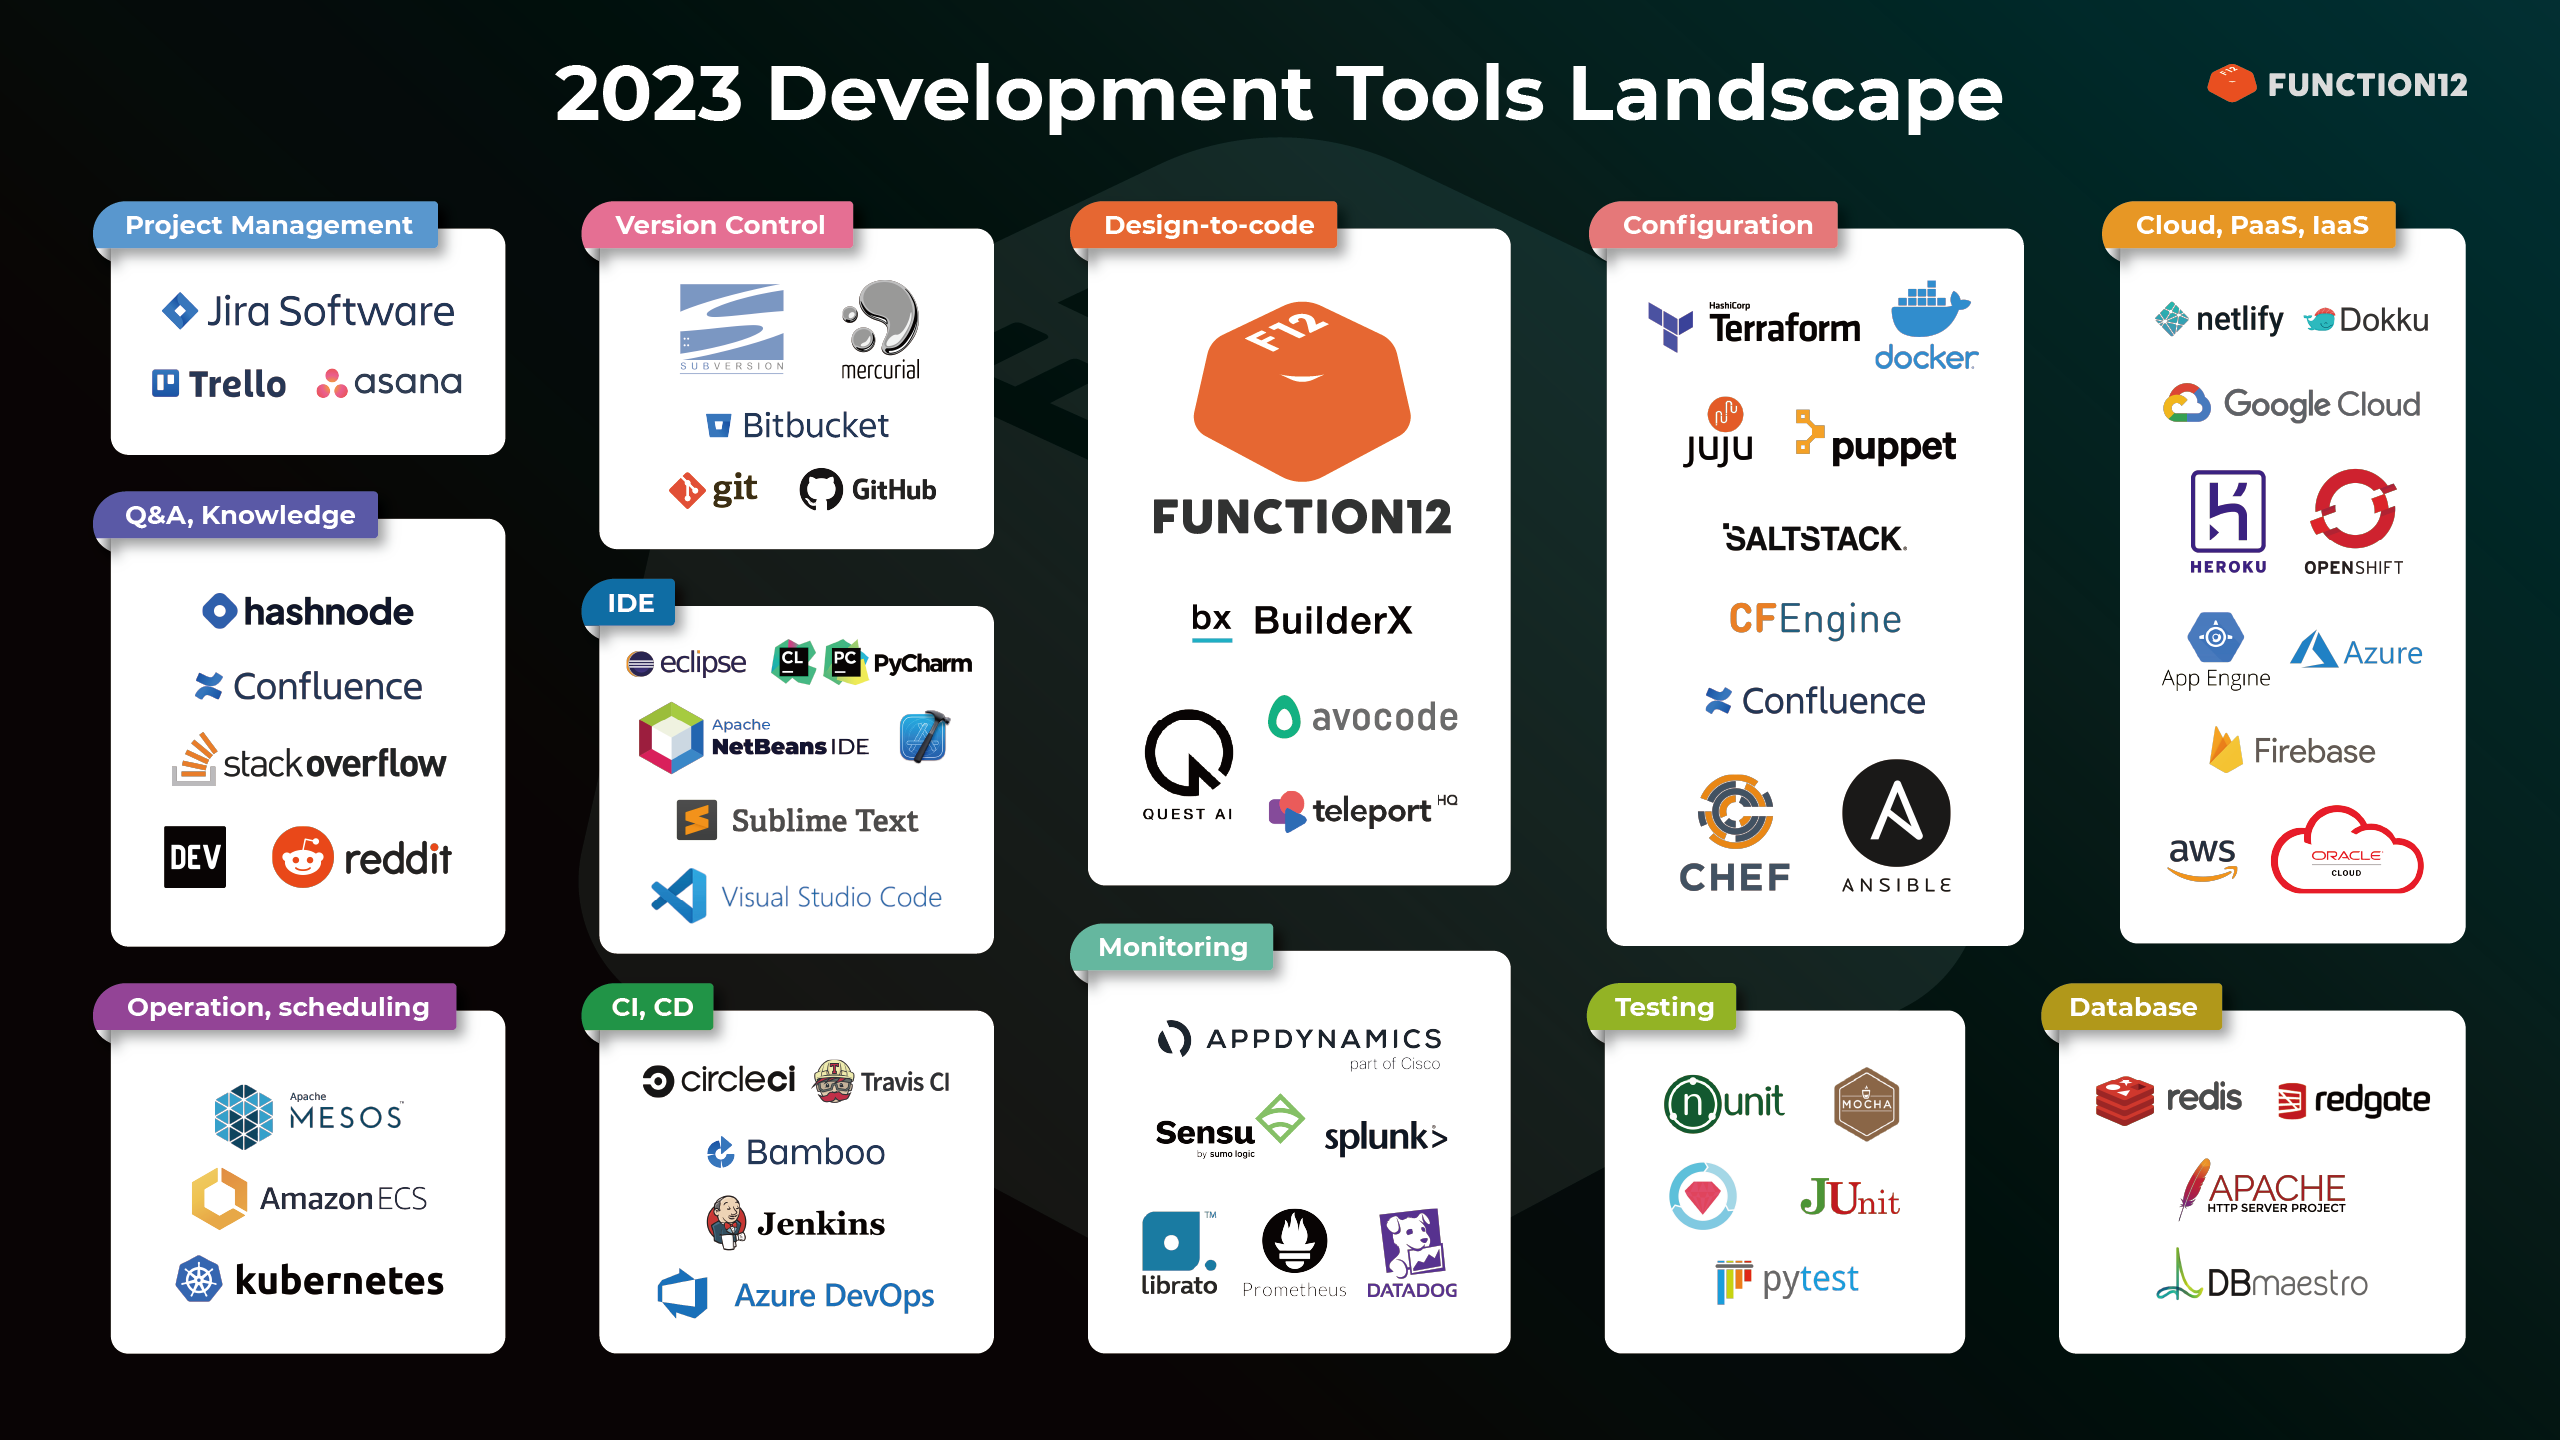 The 2023 Development Tools Landscape